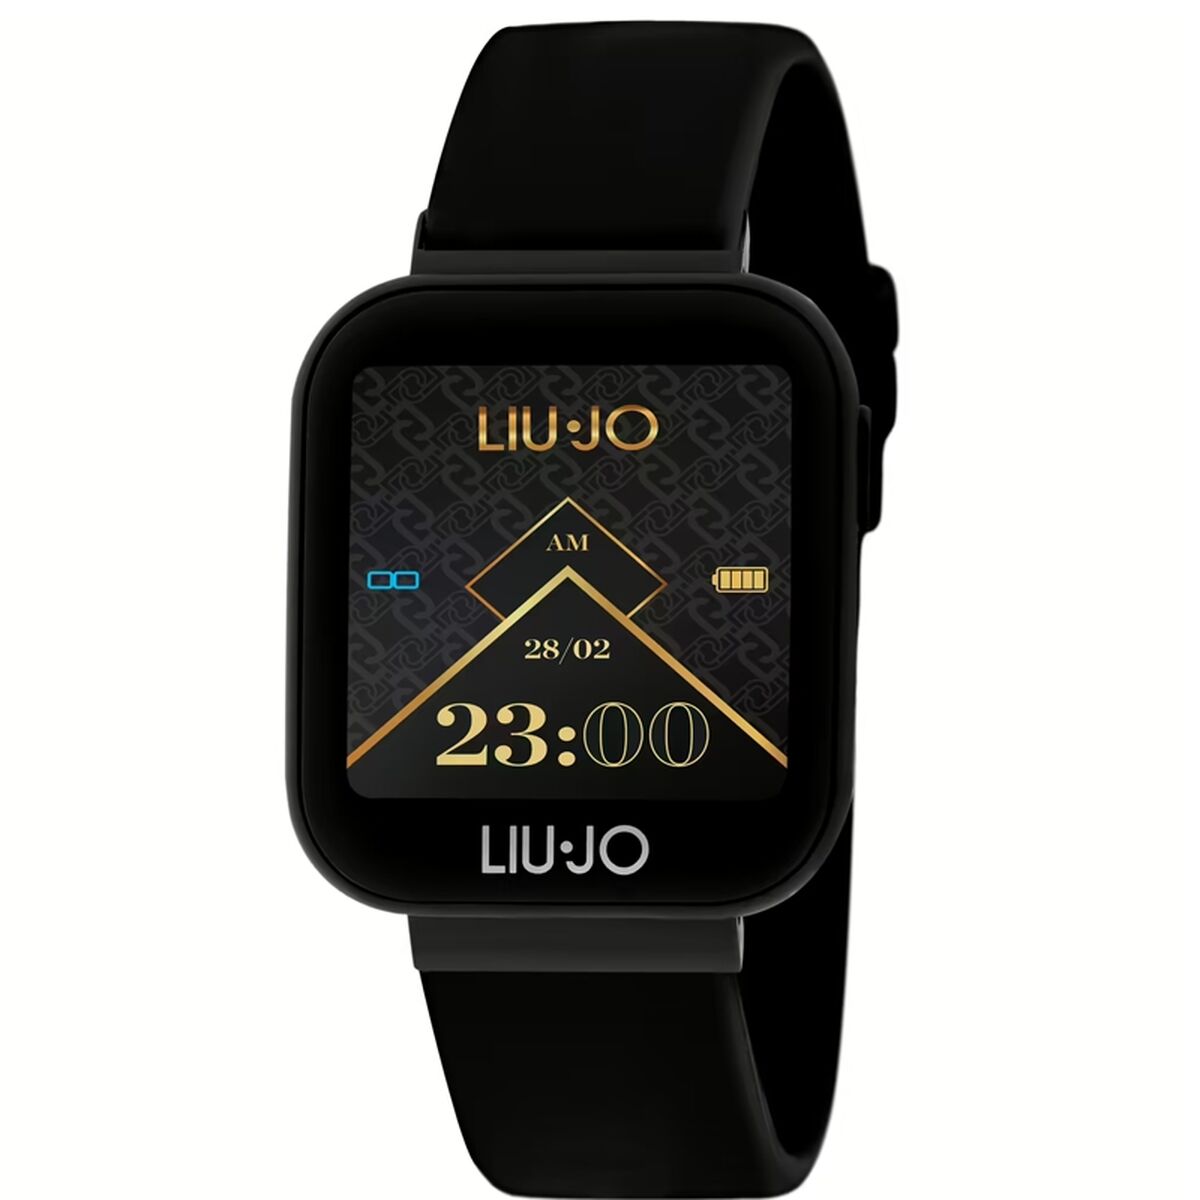 Kaufe Smartwatch LIU JO SWLJ103 bei AWK Flagship um € 145.00